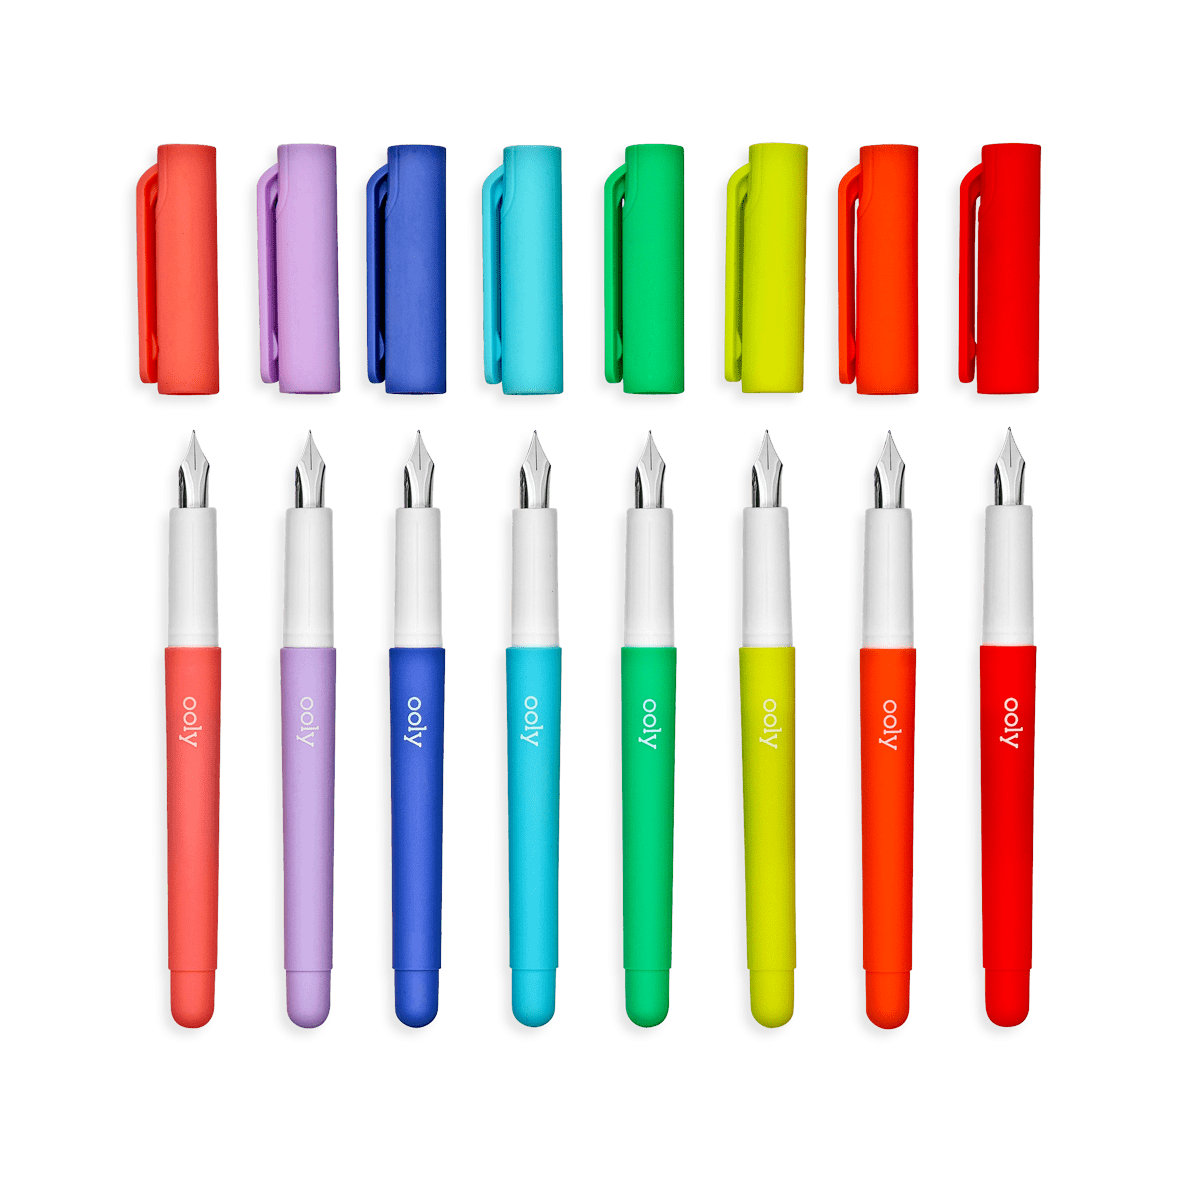 Color Write Fountain Pens - Set of 8 - Karma Kiss